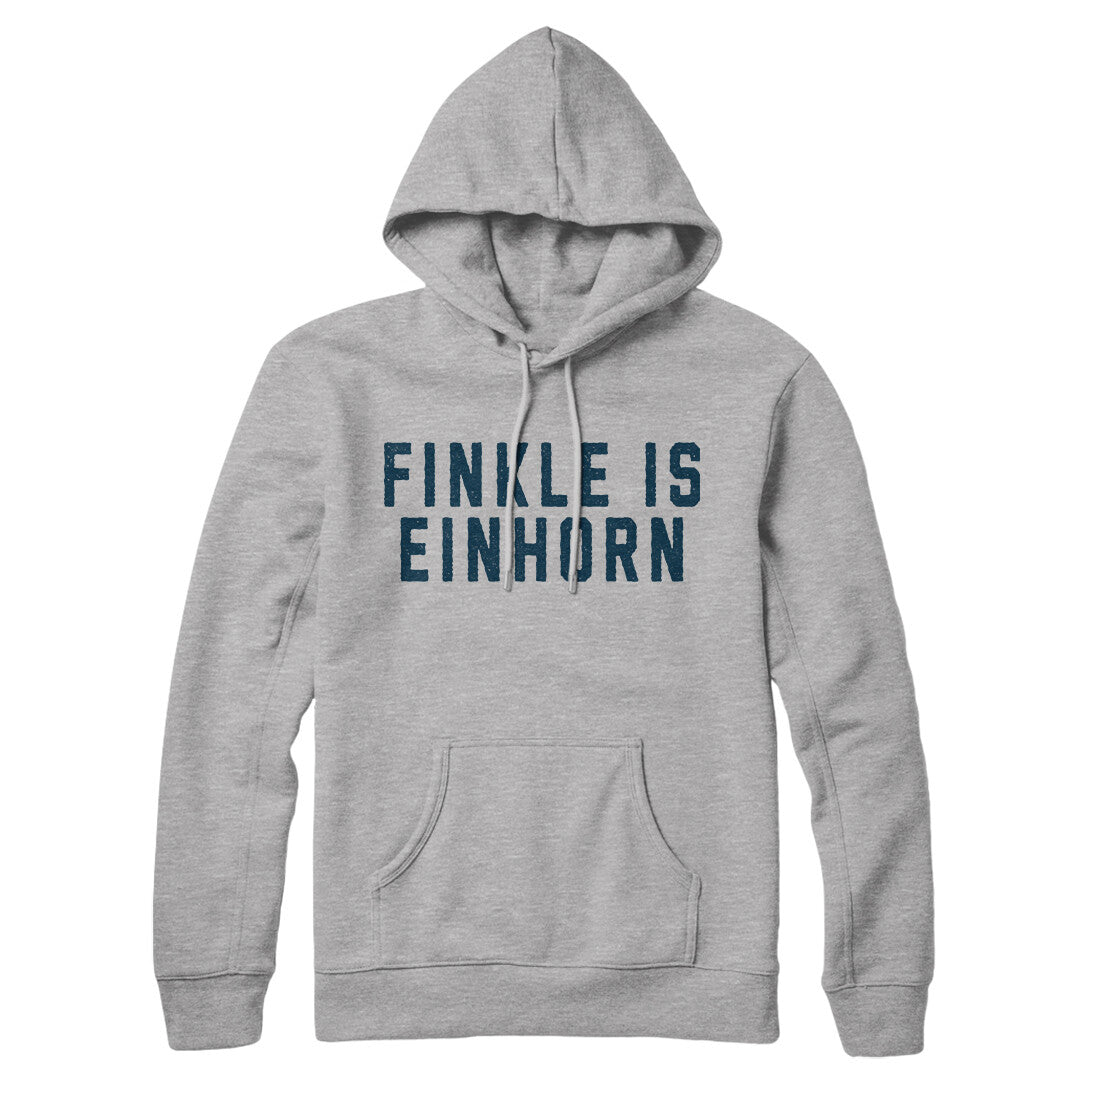 Finkle is Einhorn in Heather Grey Color